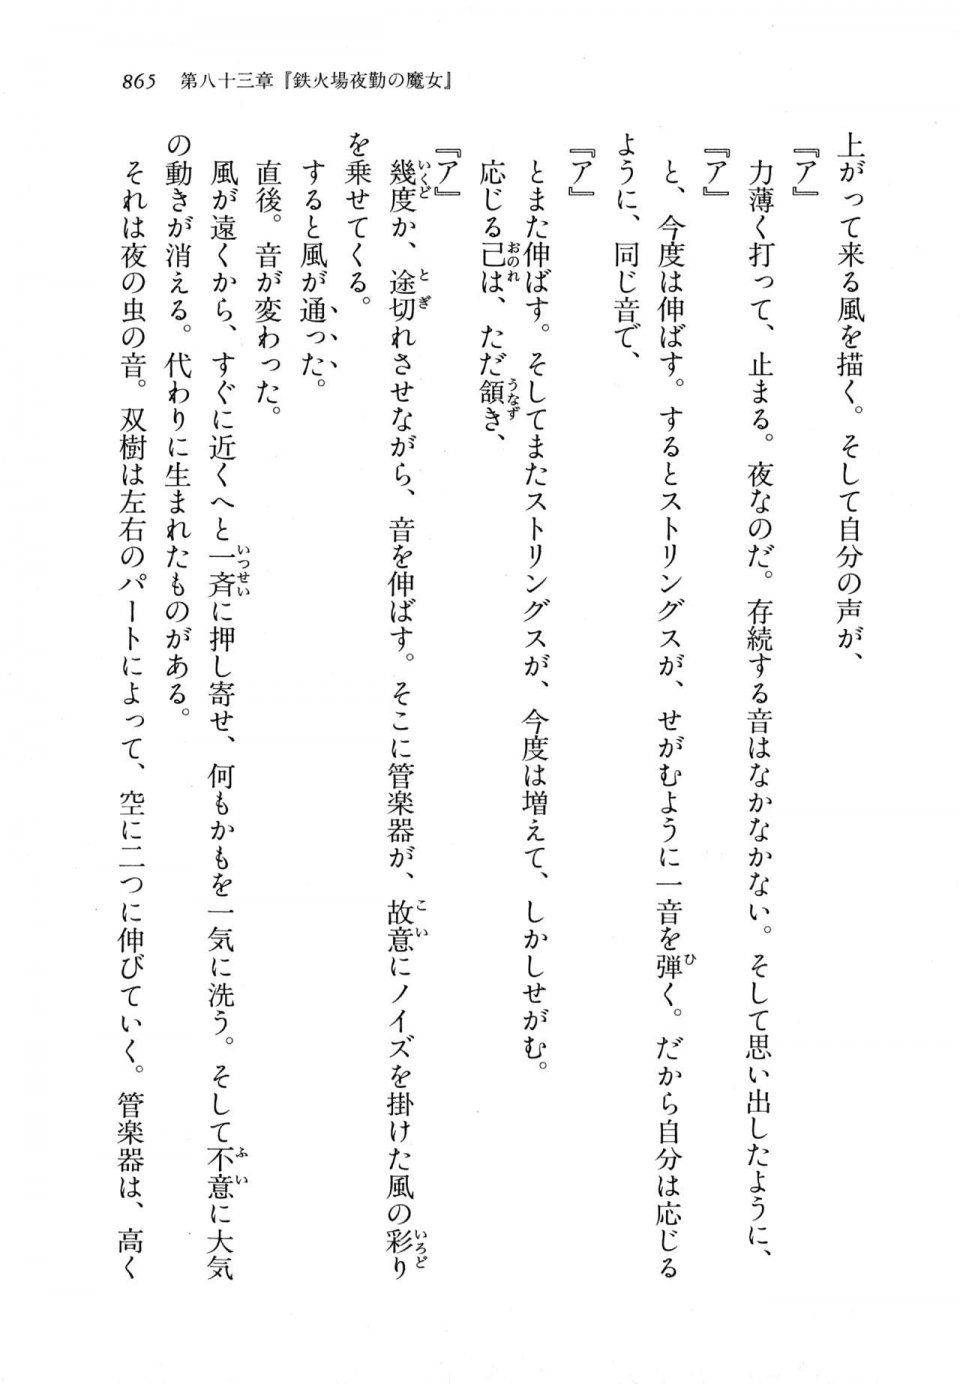 Kyoukai Senjou no Horizon LN Vol 18(7C) Part 2 - Photo #305